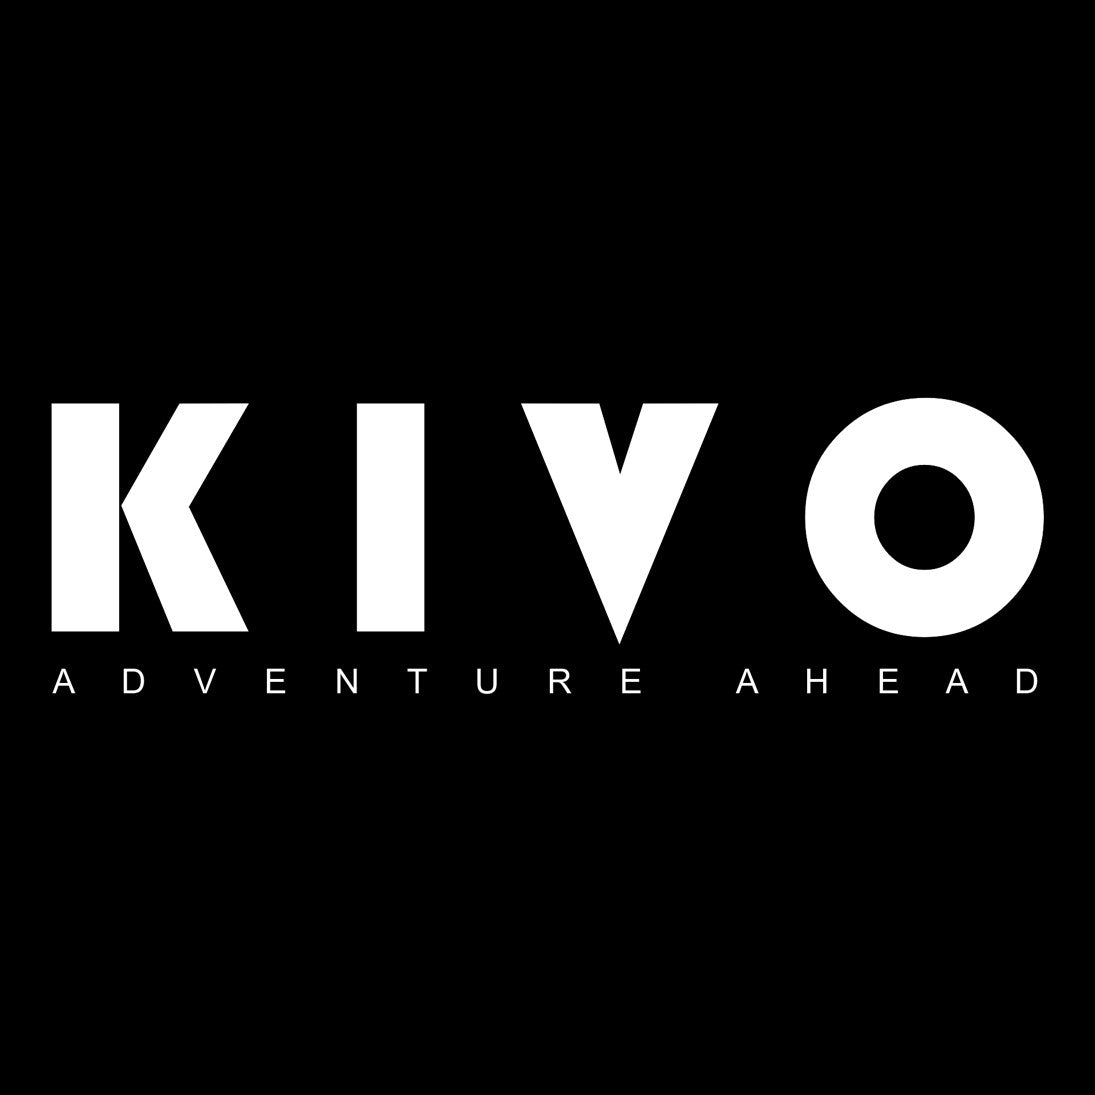 KIVO classic tote bag